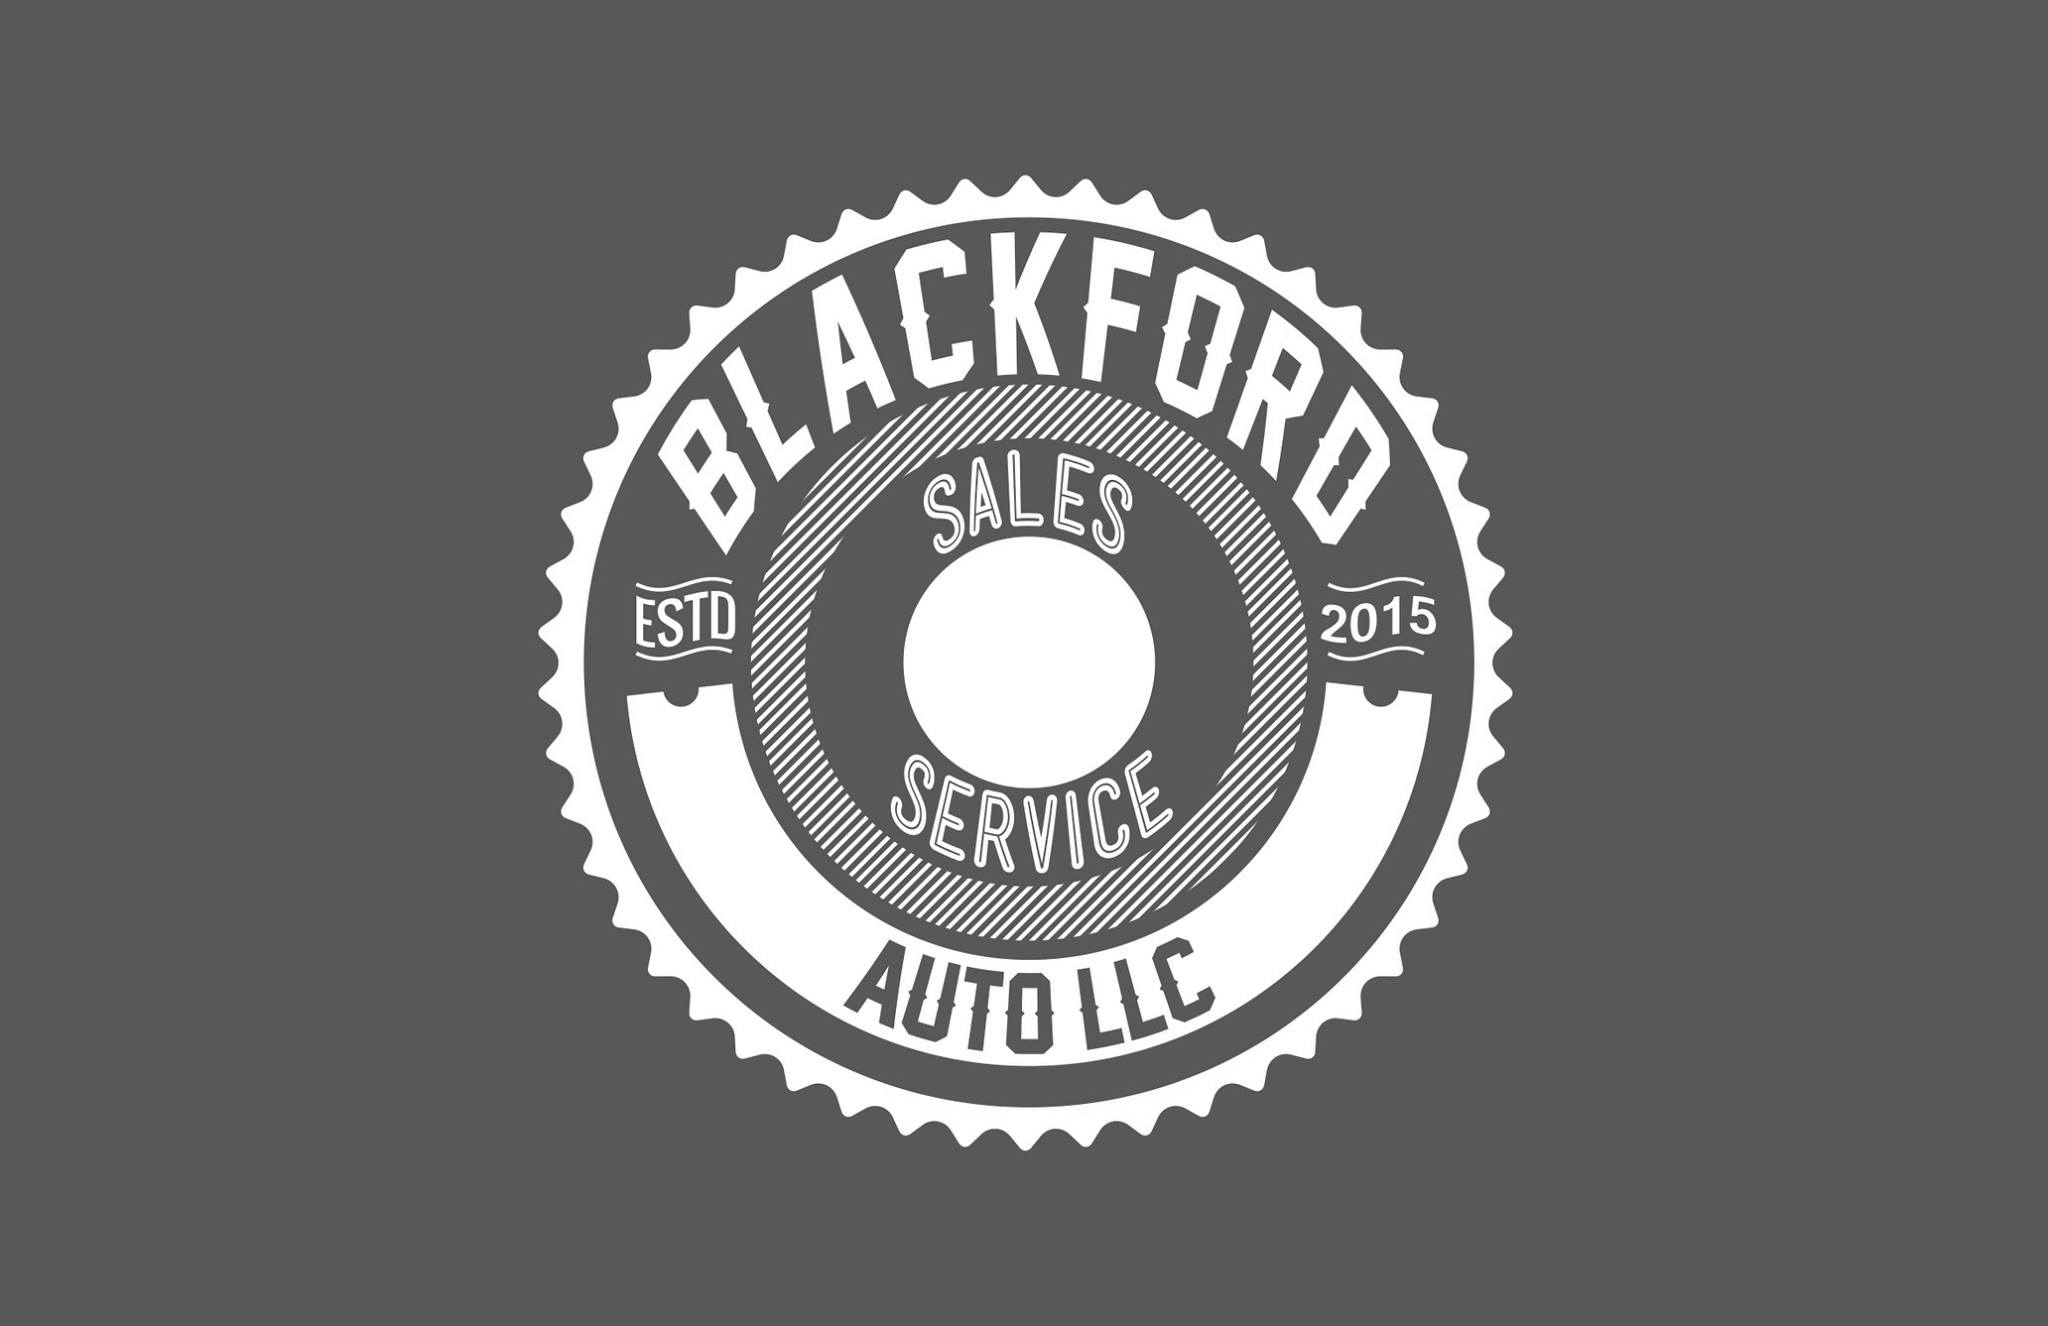 Blackford Auto